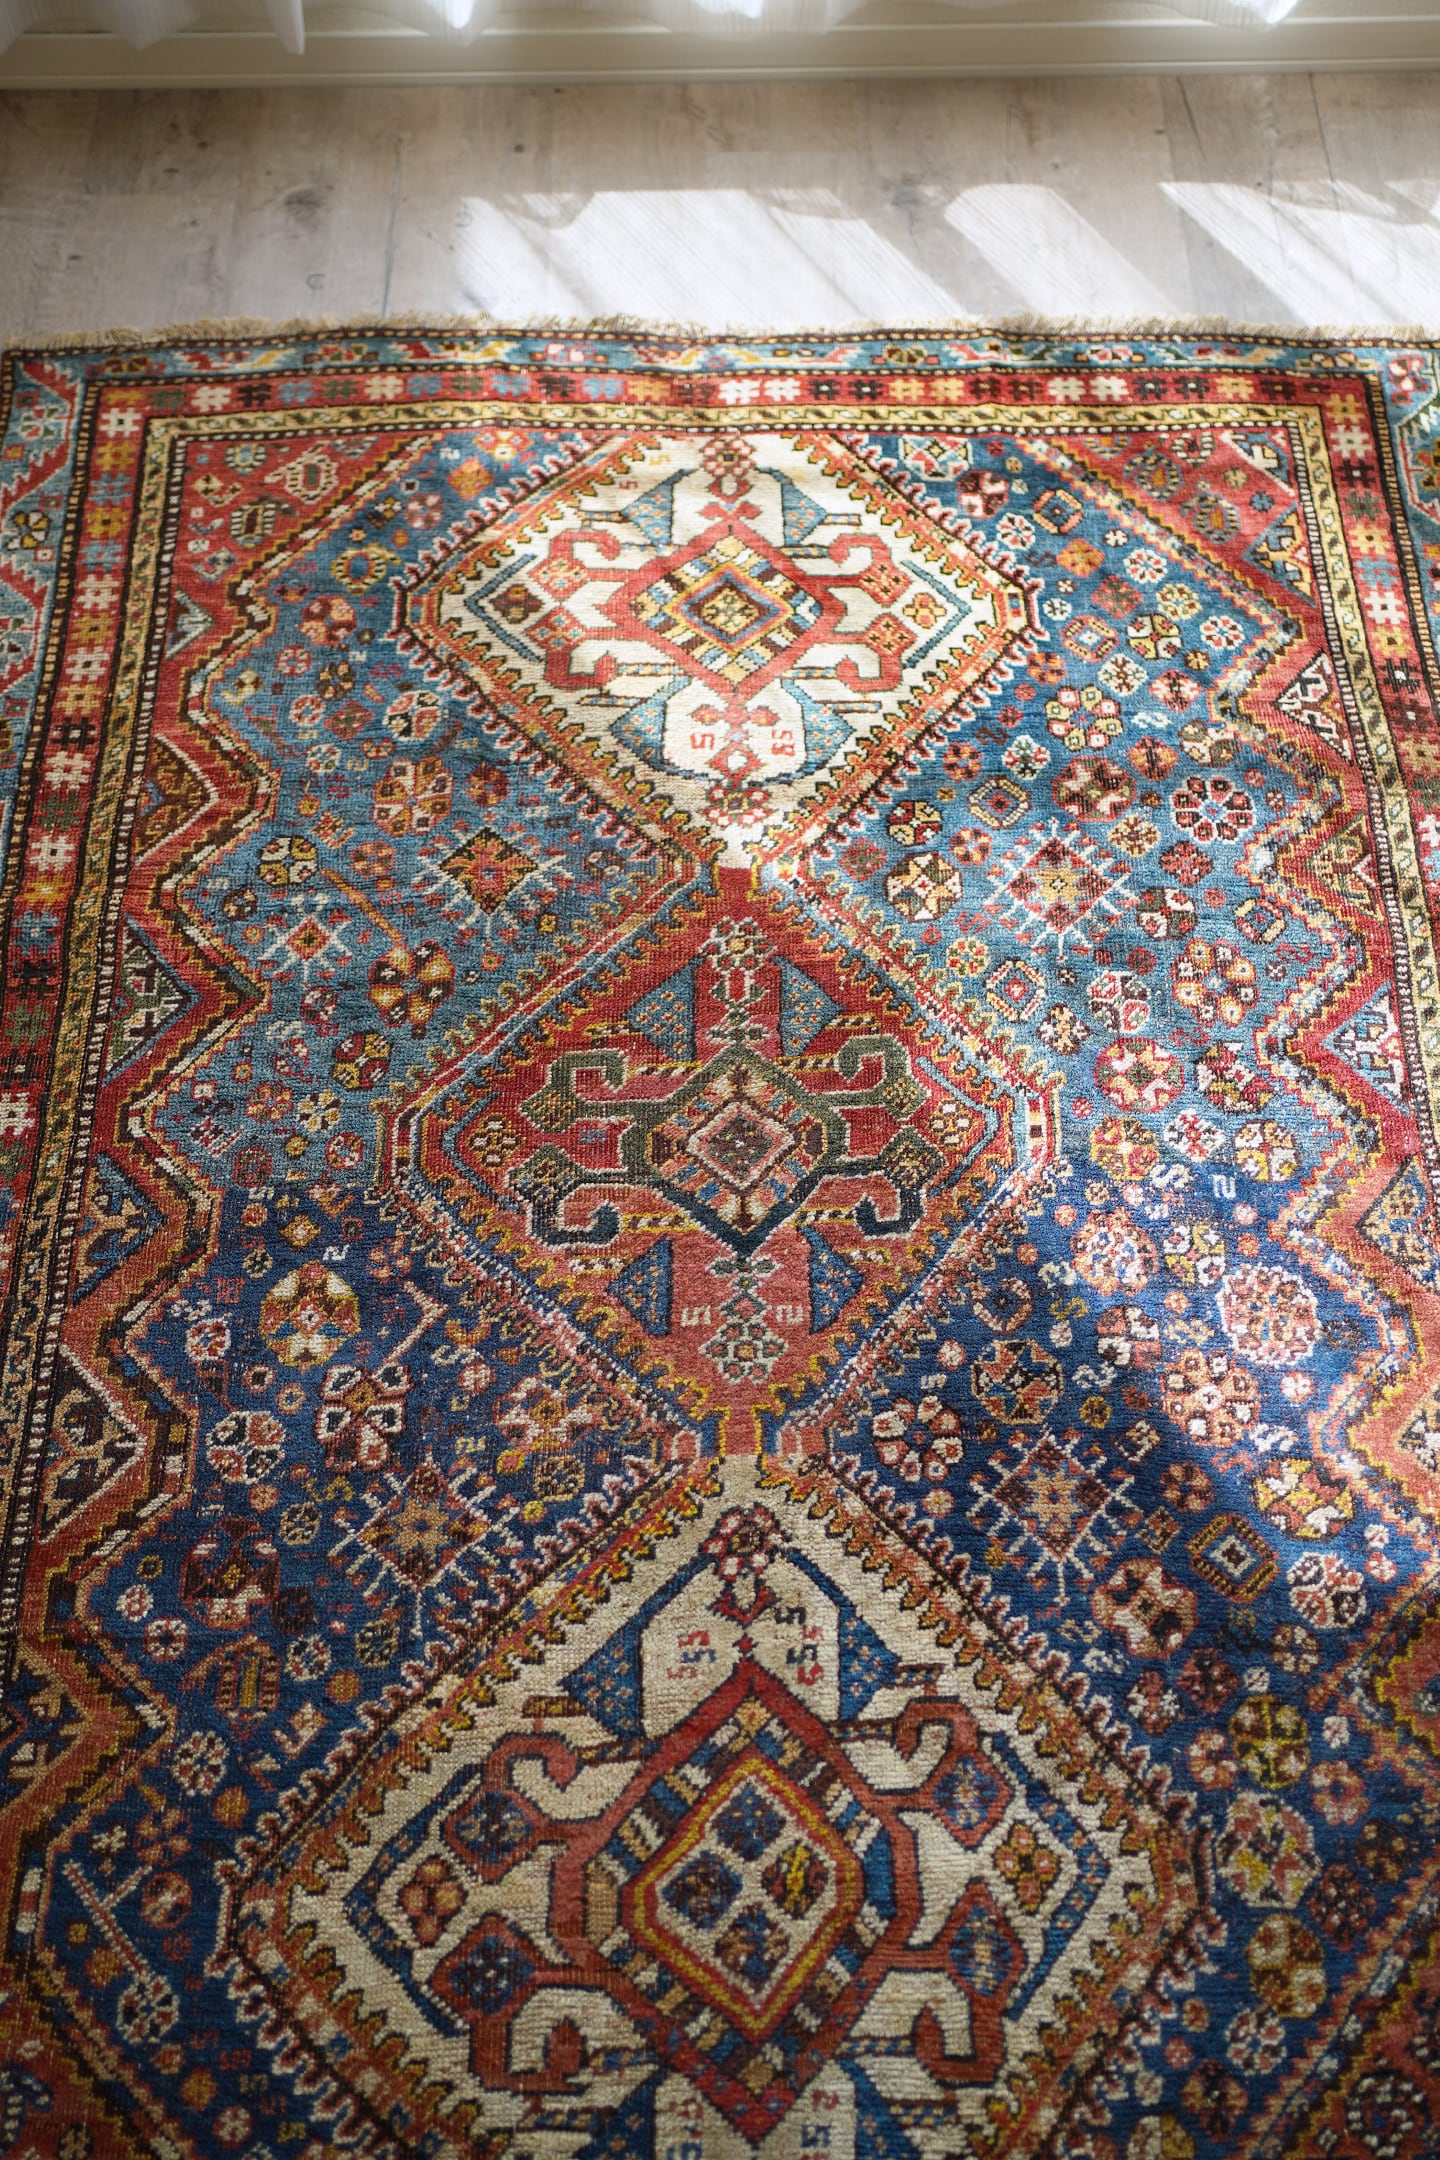 206】Antique Persian Khamseh rug 1880's | ヴィンテージラグ専門店